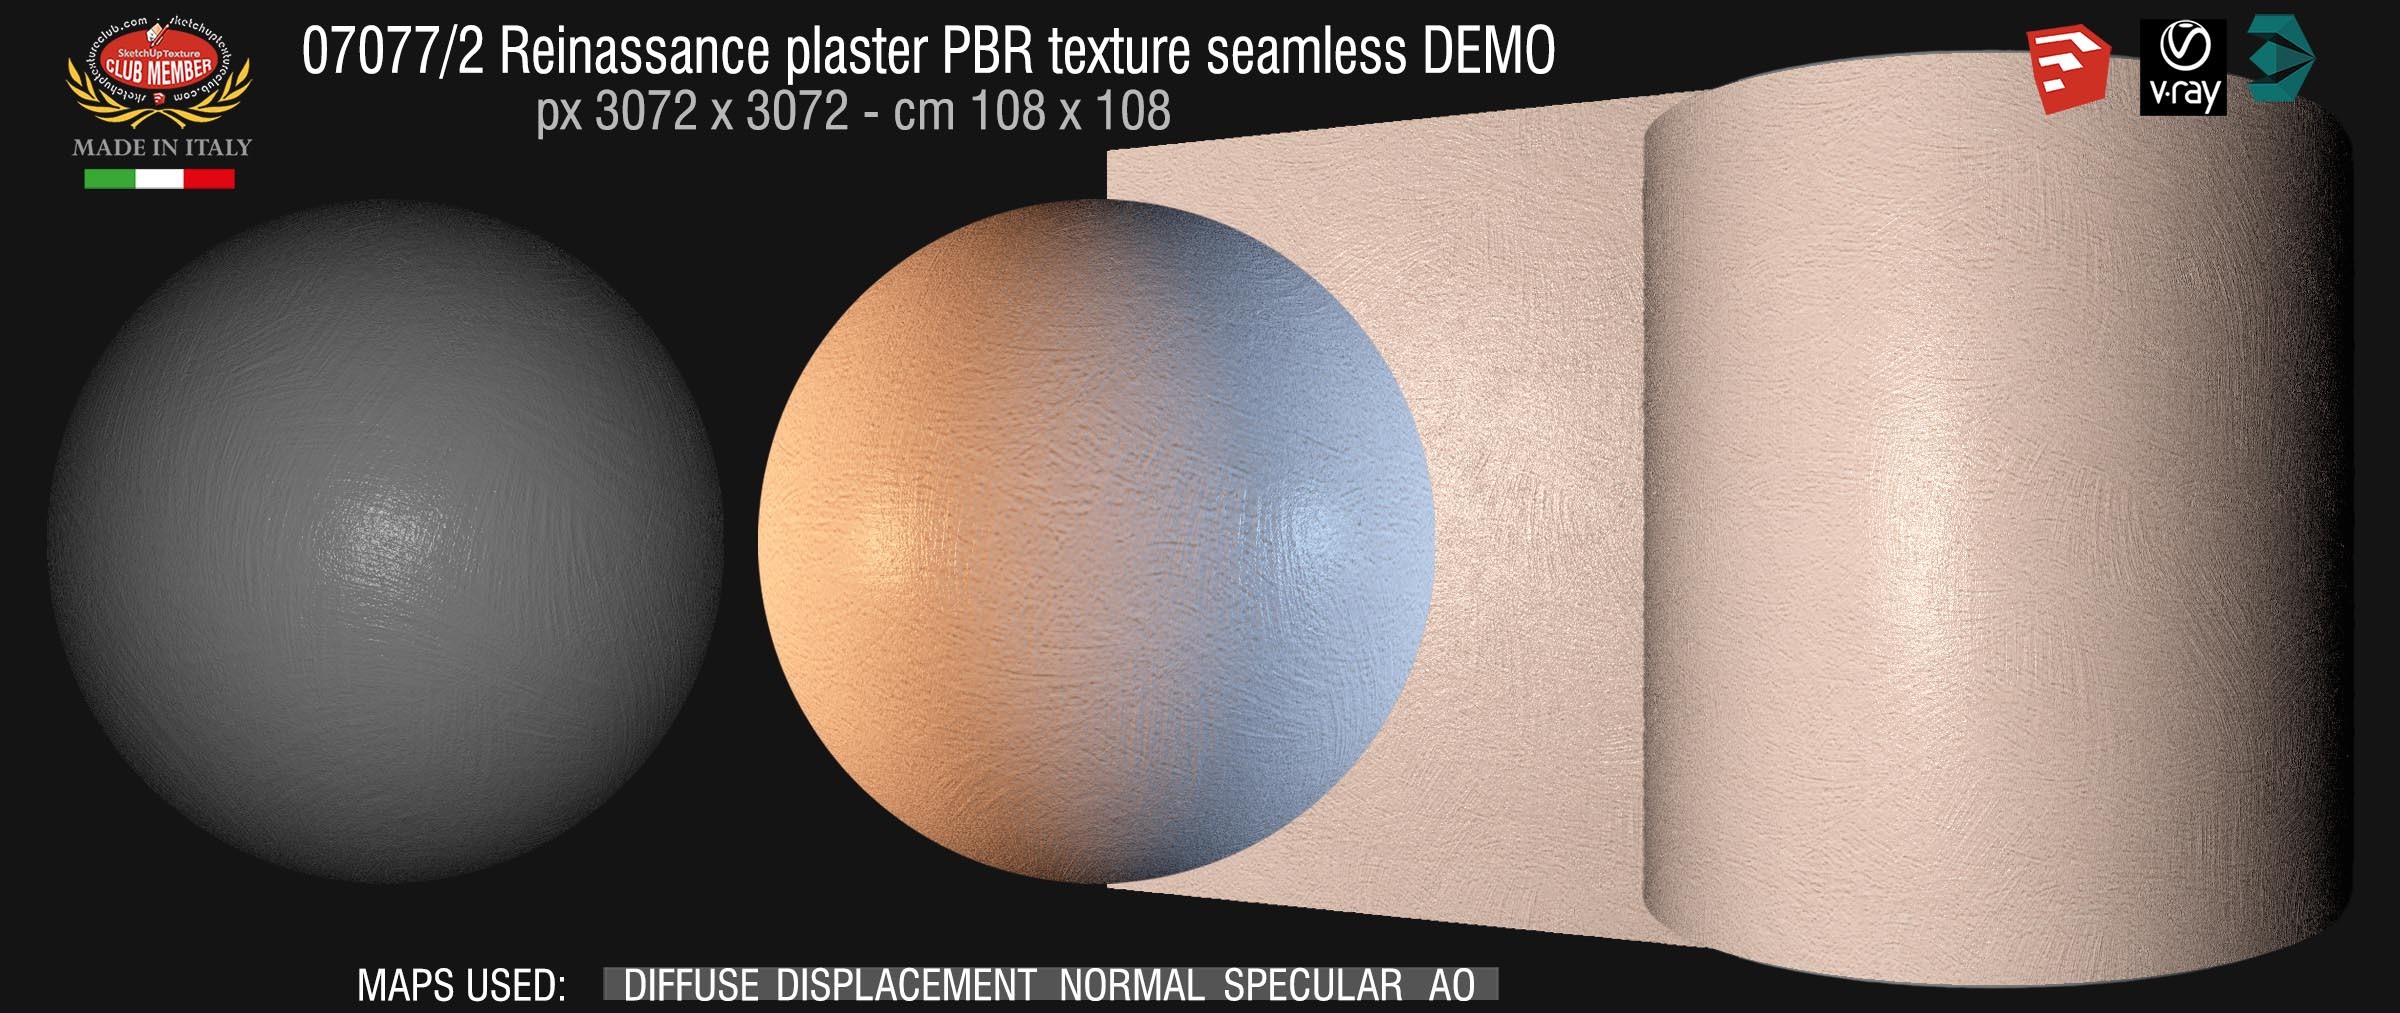 07077_2 Reinassance plaster PBR texture seamless DEMO